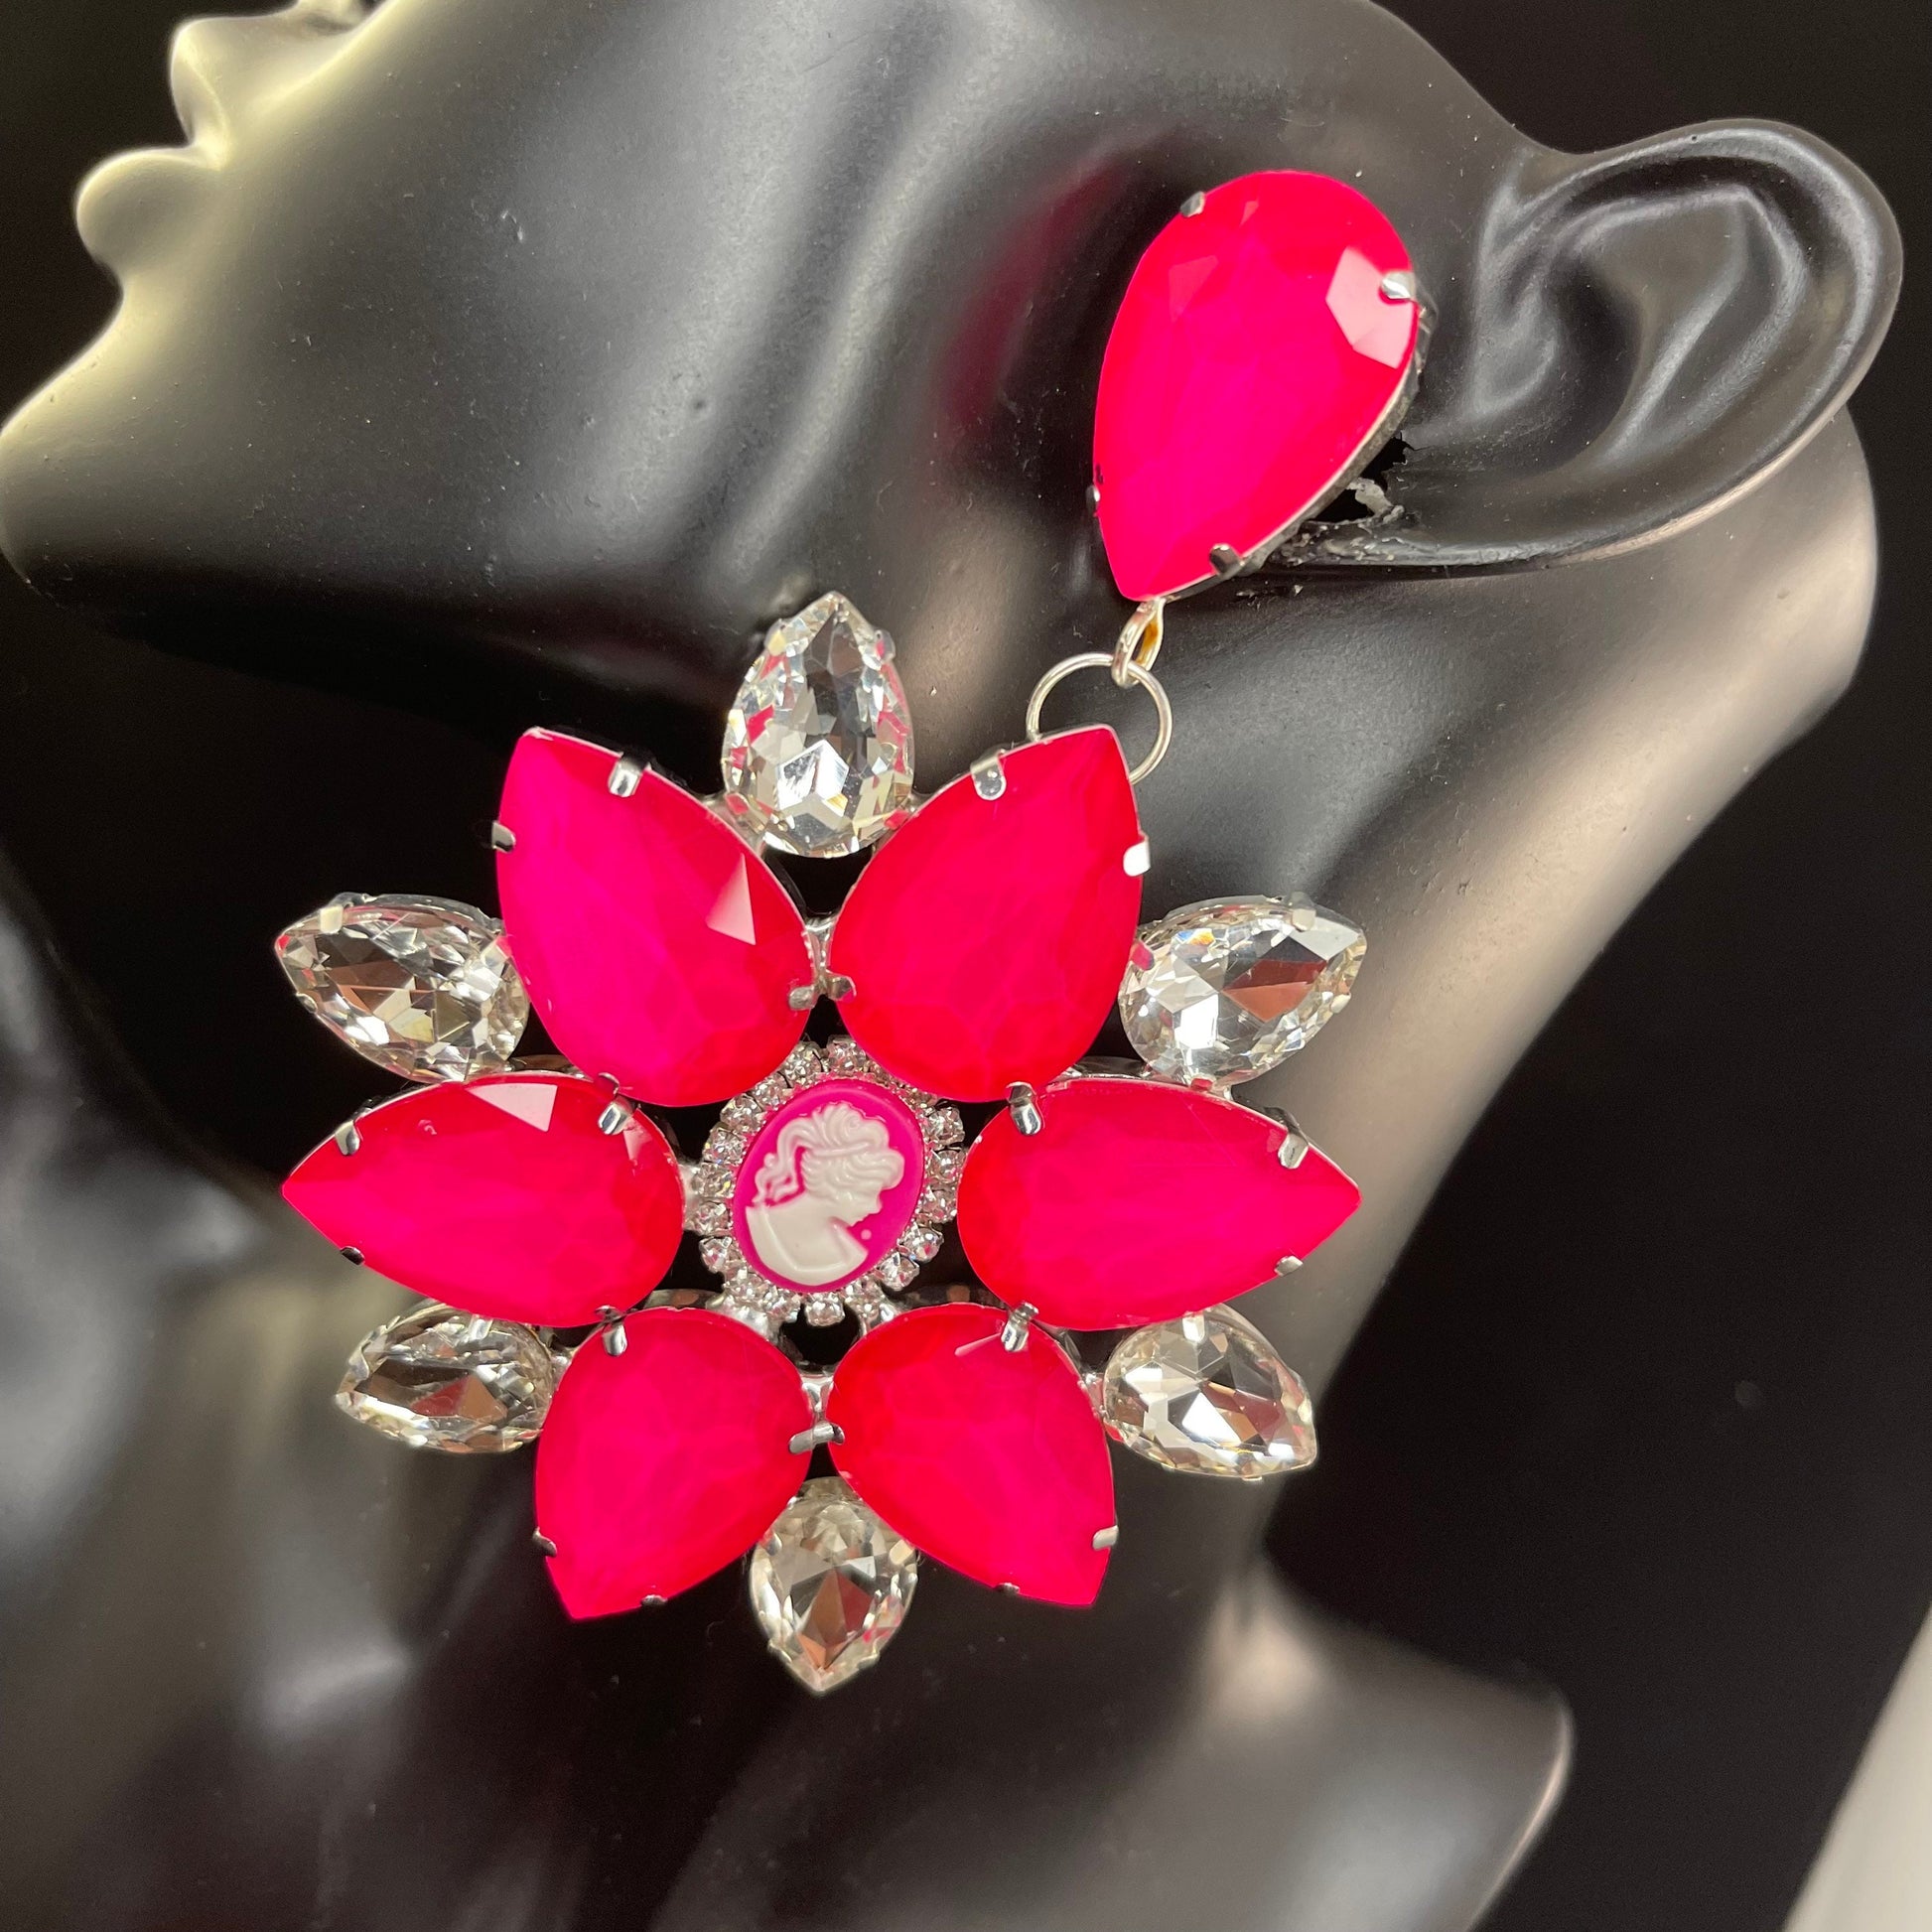 Neon Cameo Earrings / Clip On or Pierced / Statement Earrings / Crystal Jewelry / Dress Earrings / Drag Queen / phantom of the opera